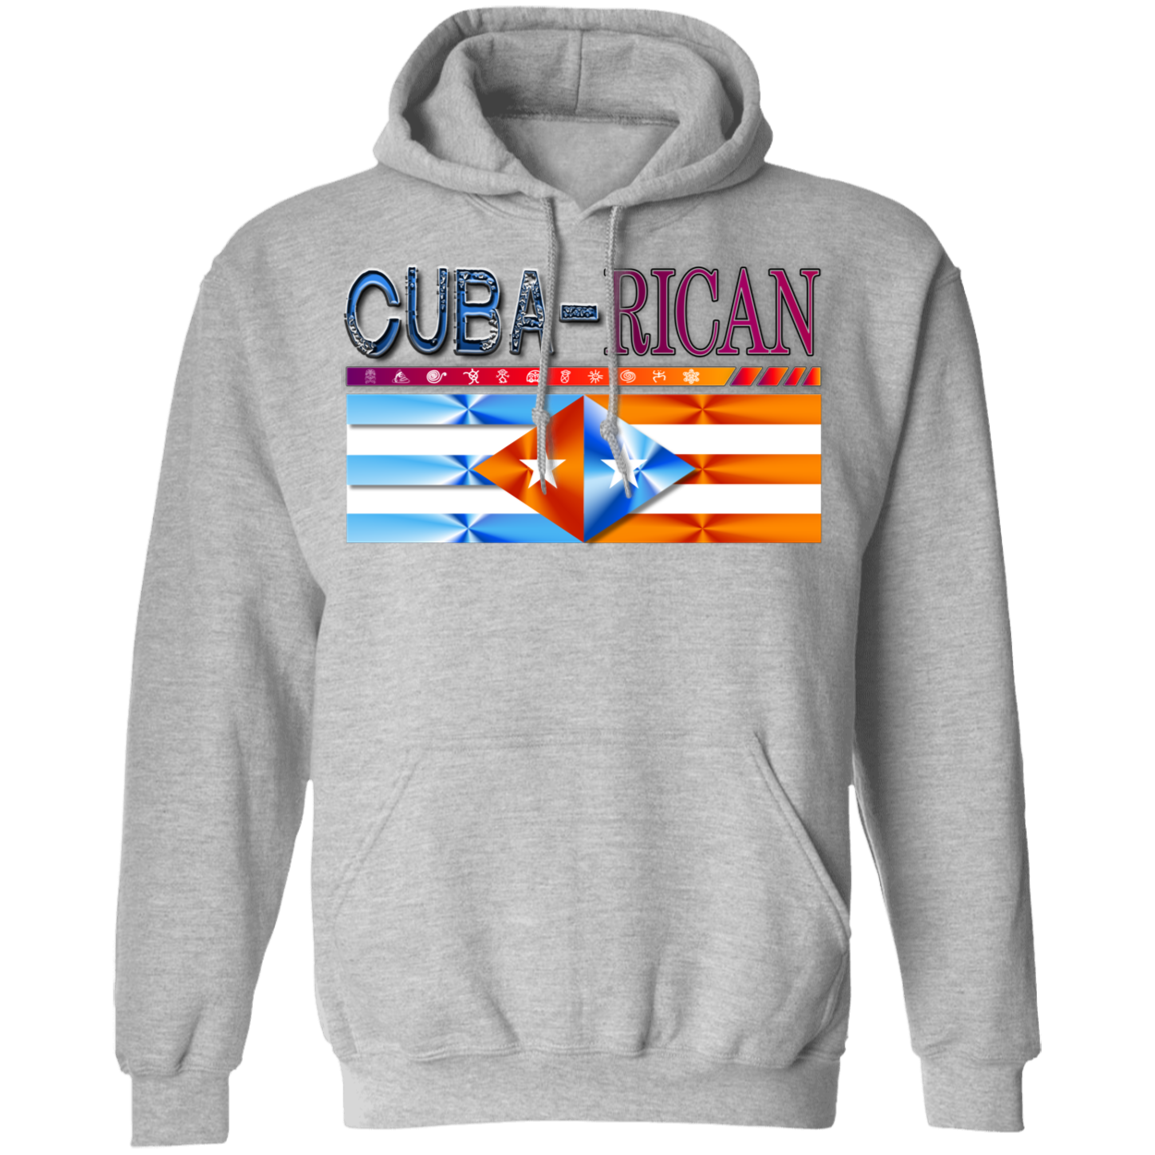 Cuba-Rican Pullover Hoodie - Puerto Rican Pride